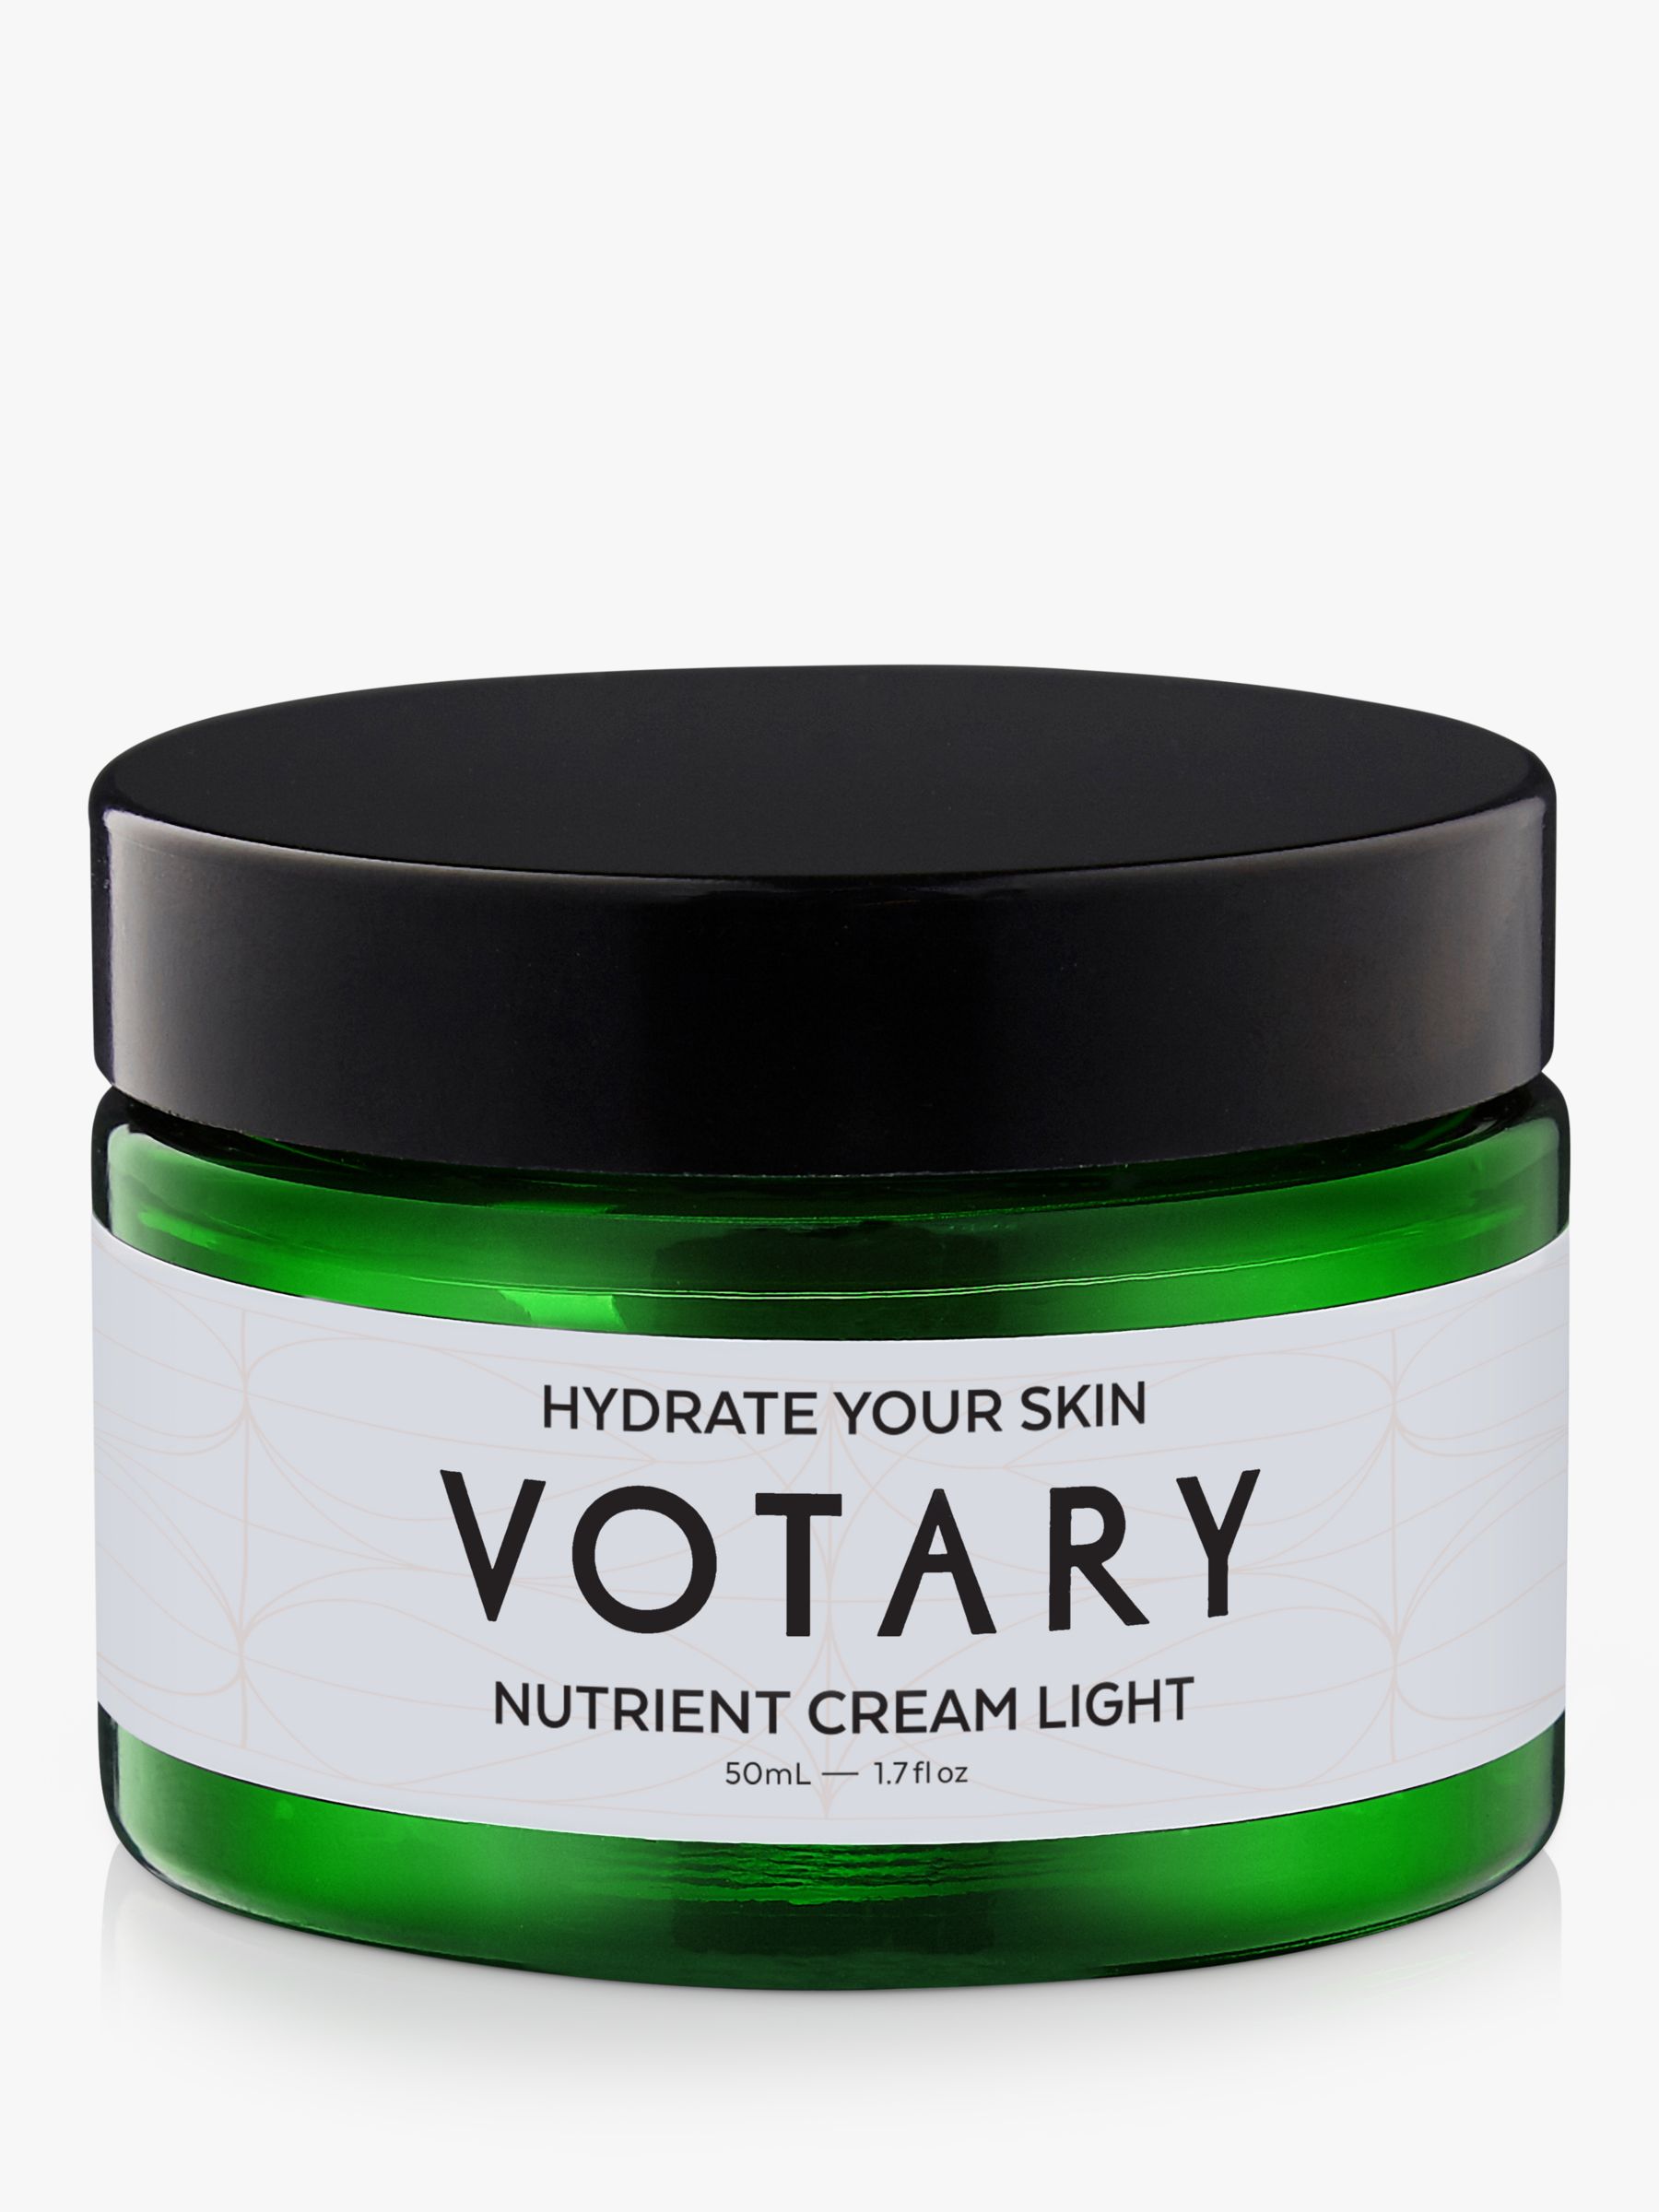 Votary Nutrient Cream Light, 50ml 1